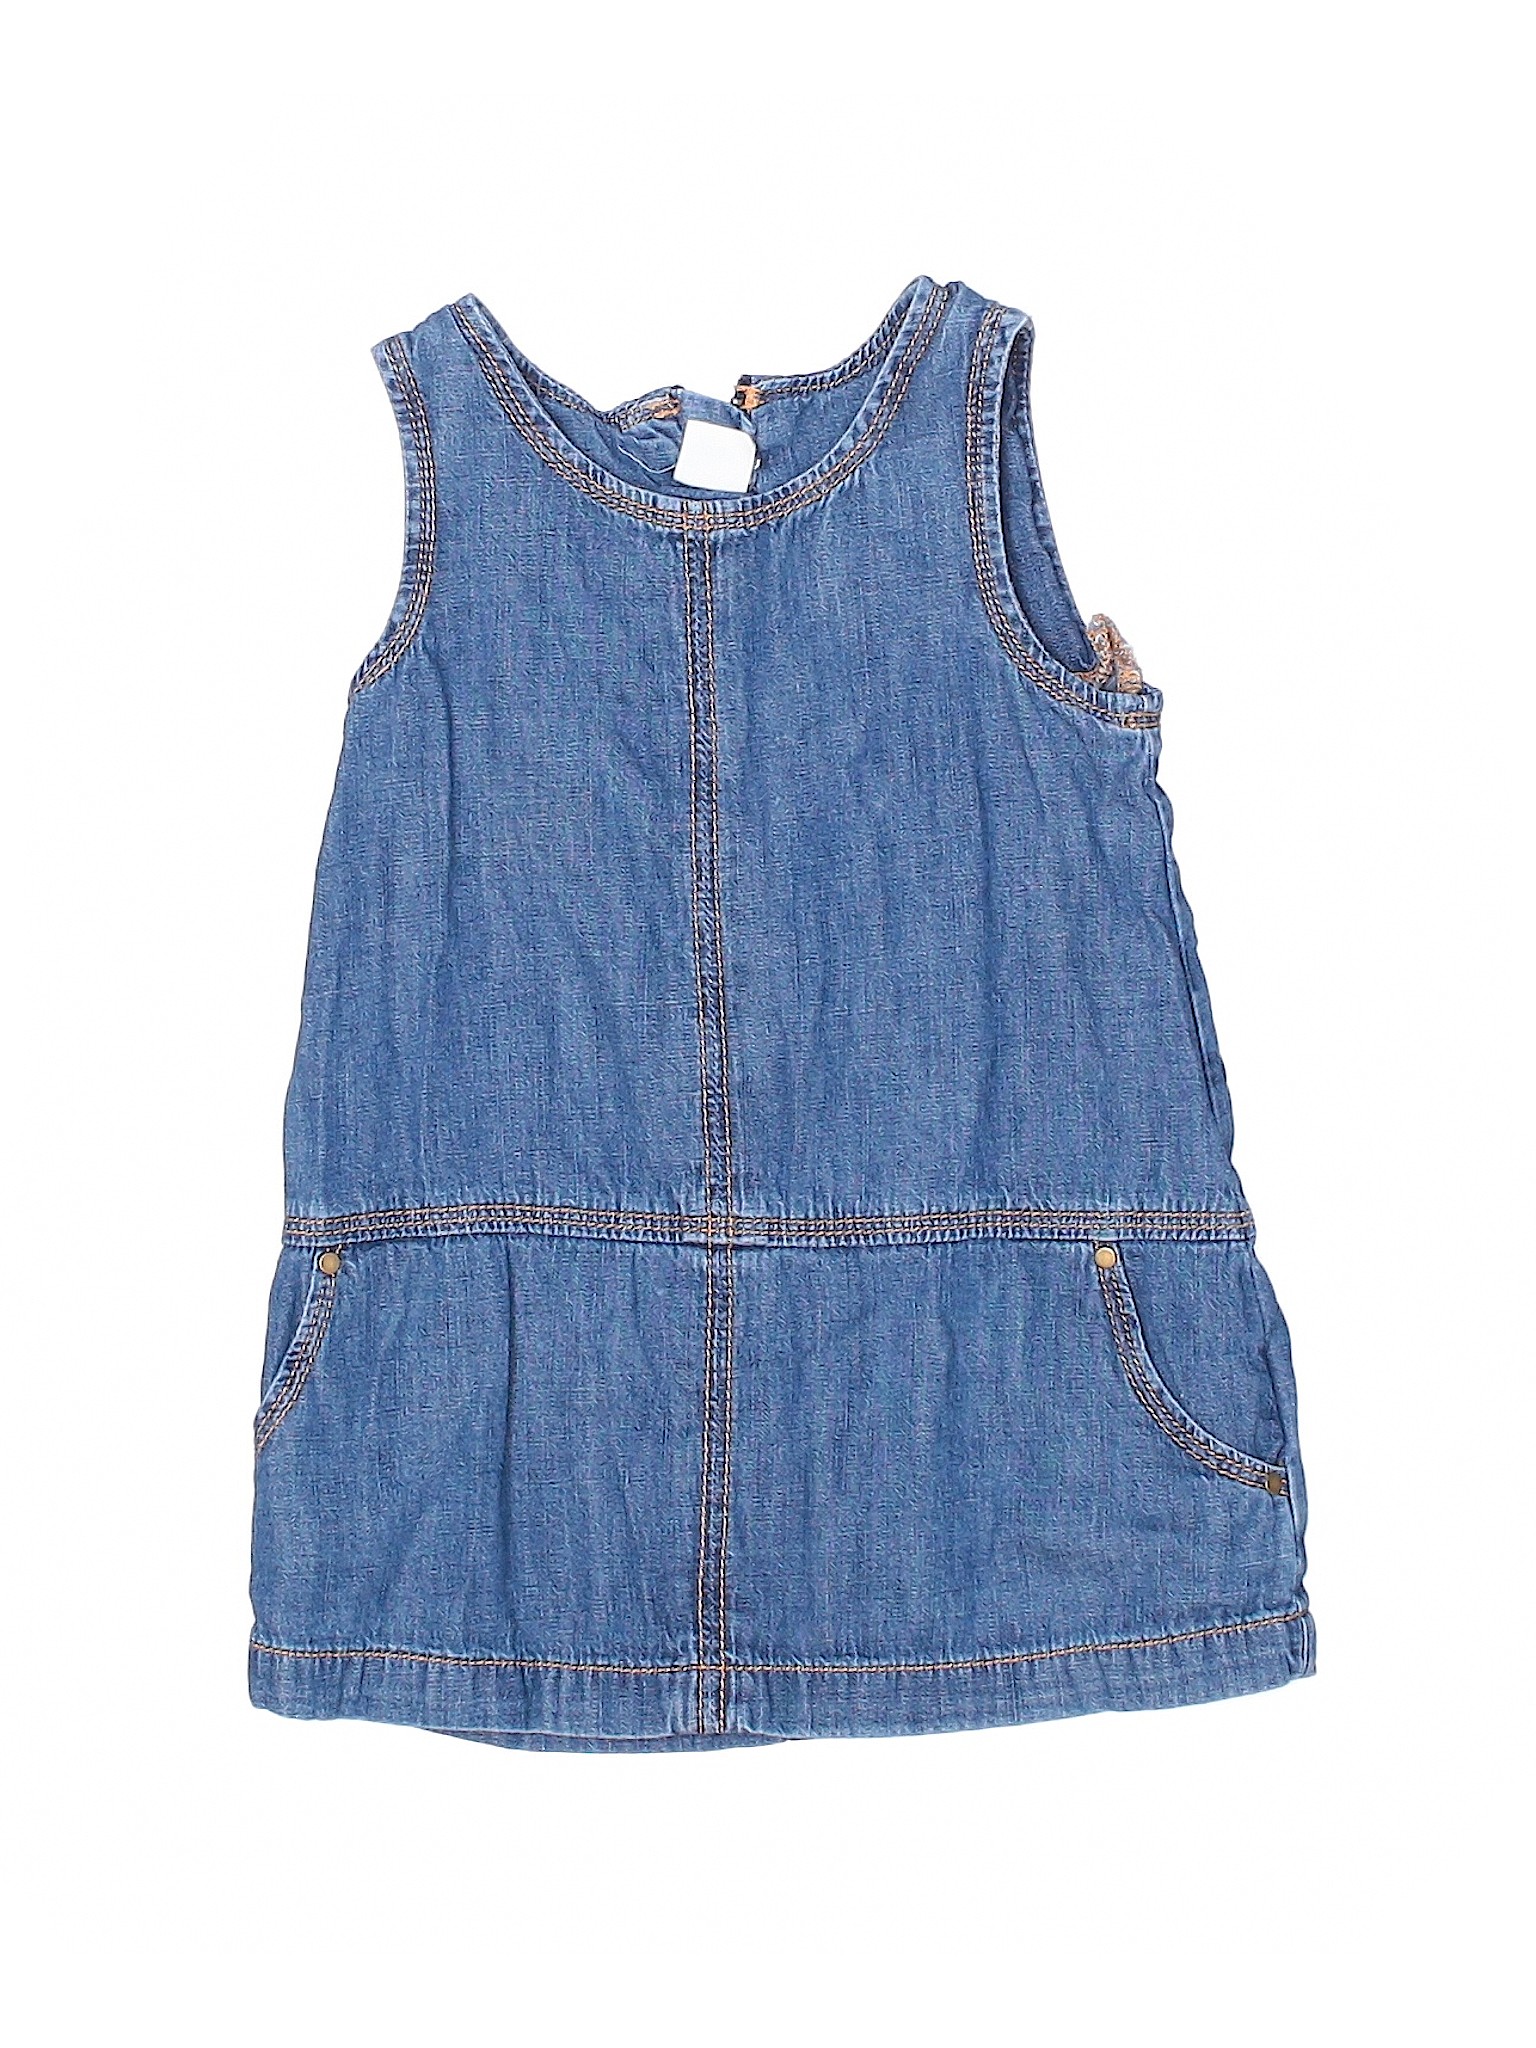 Baby Gap Girls Blue Dress 18-24 Months | eBay